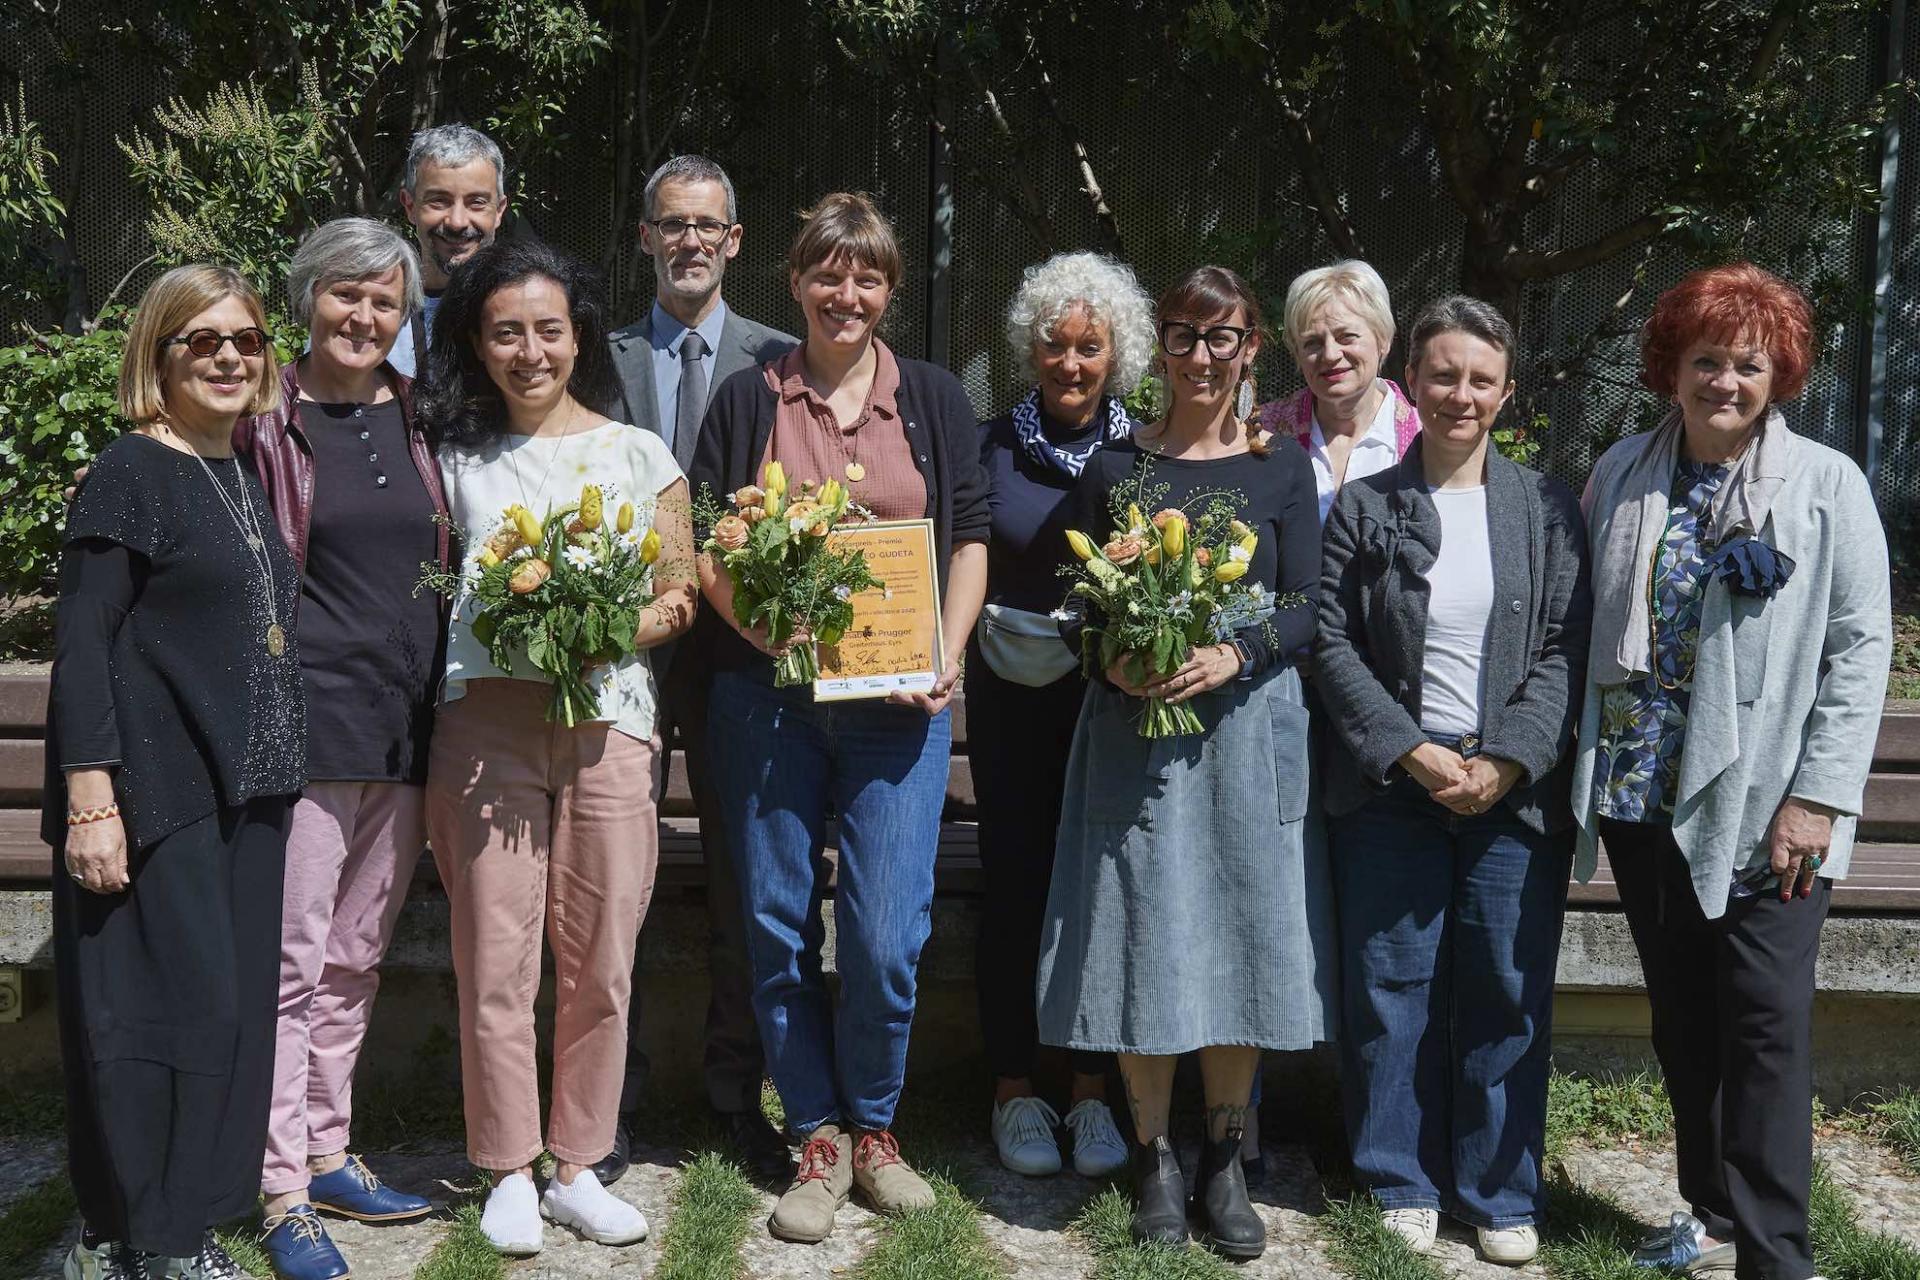 Foto di gruppo in occasione del premio in memoria di Agitu Ideo Gudeta